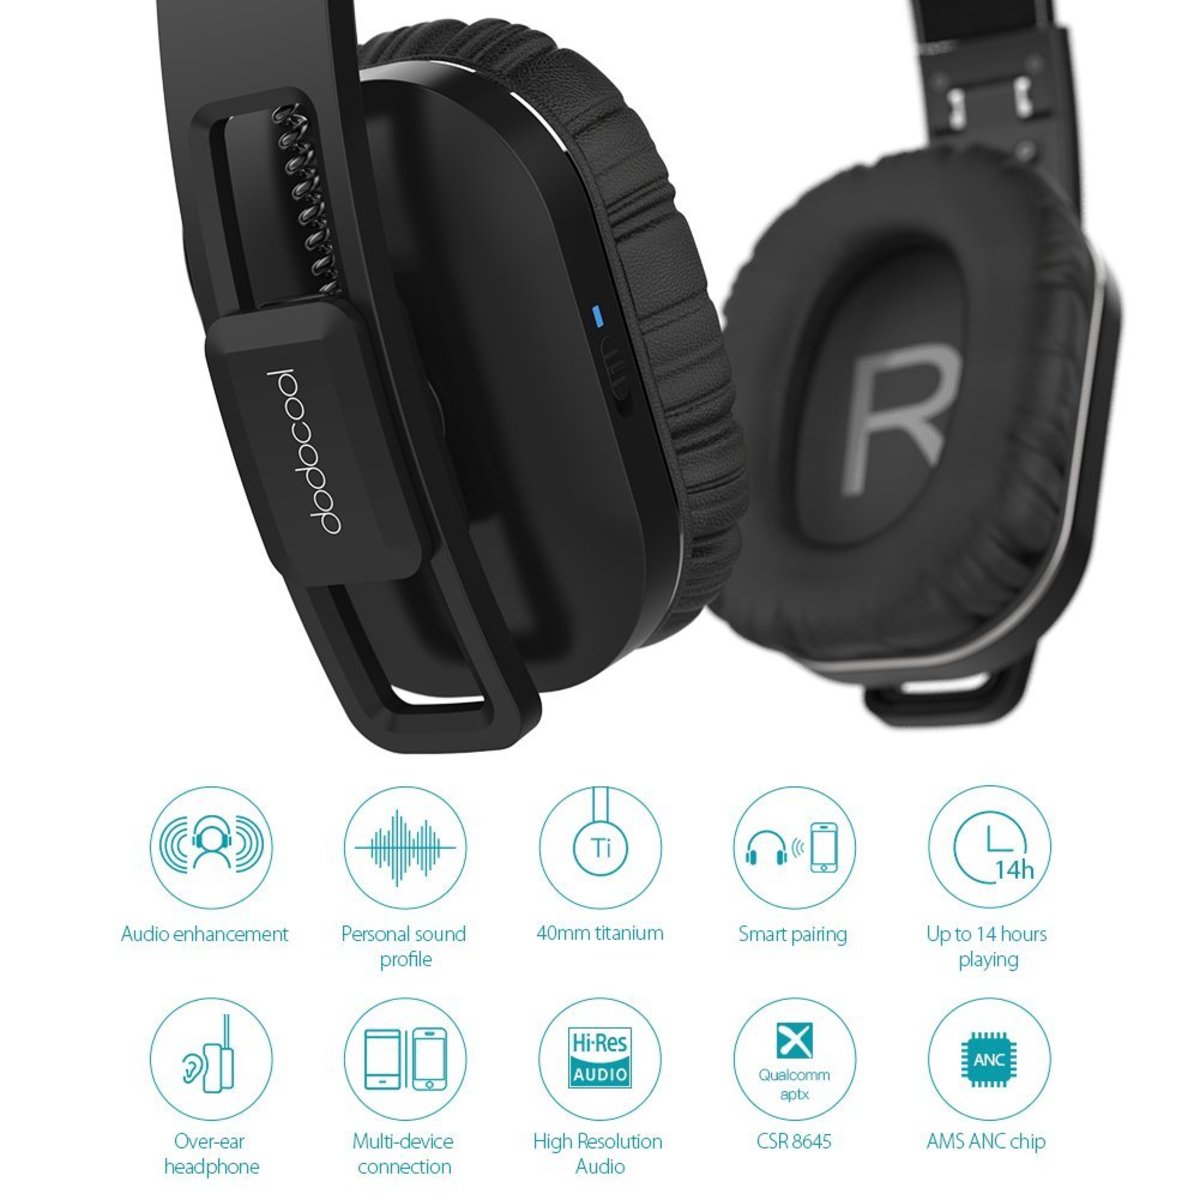 Dodocool DA158 Wireless Headphones Review